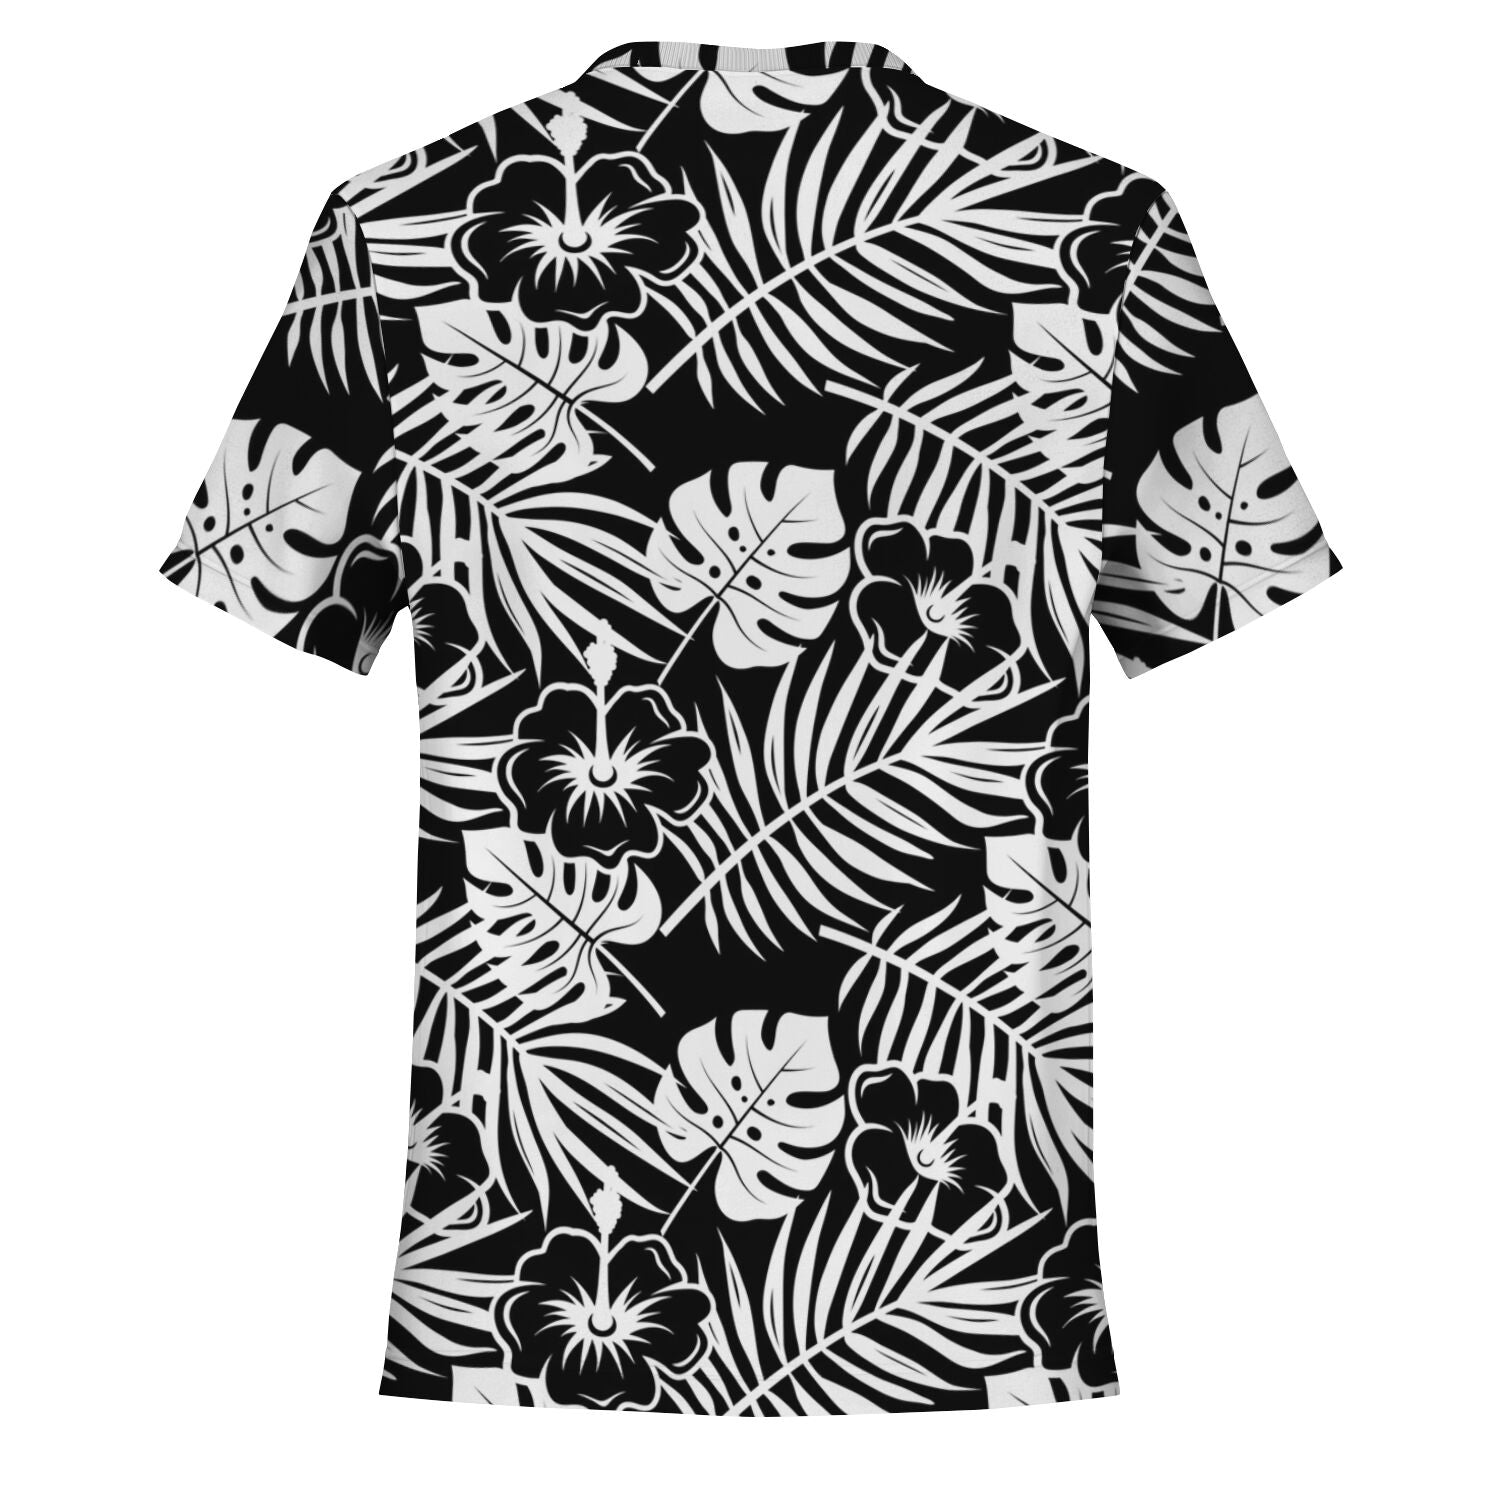 Rad Palm BLK WHT T-Shirt